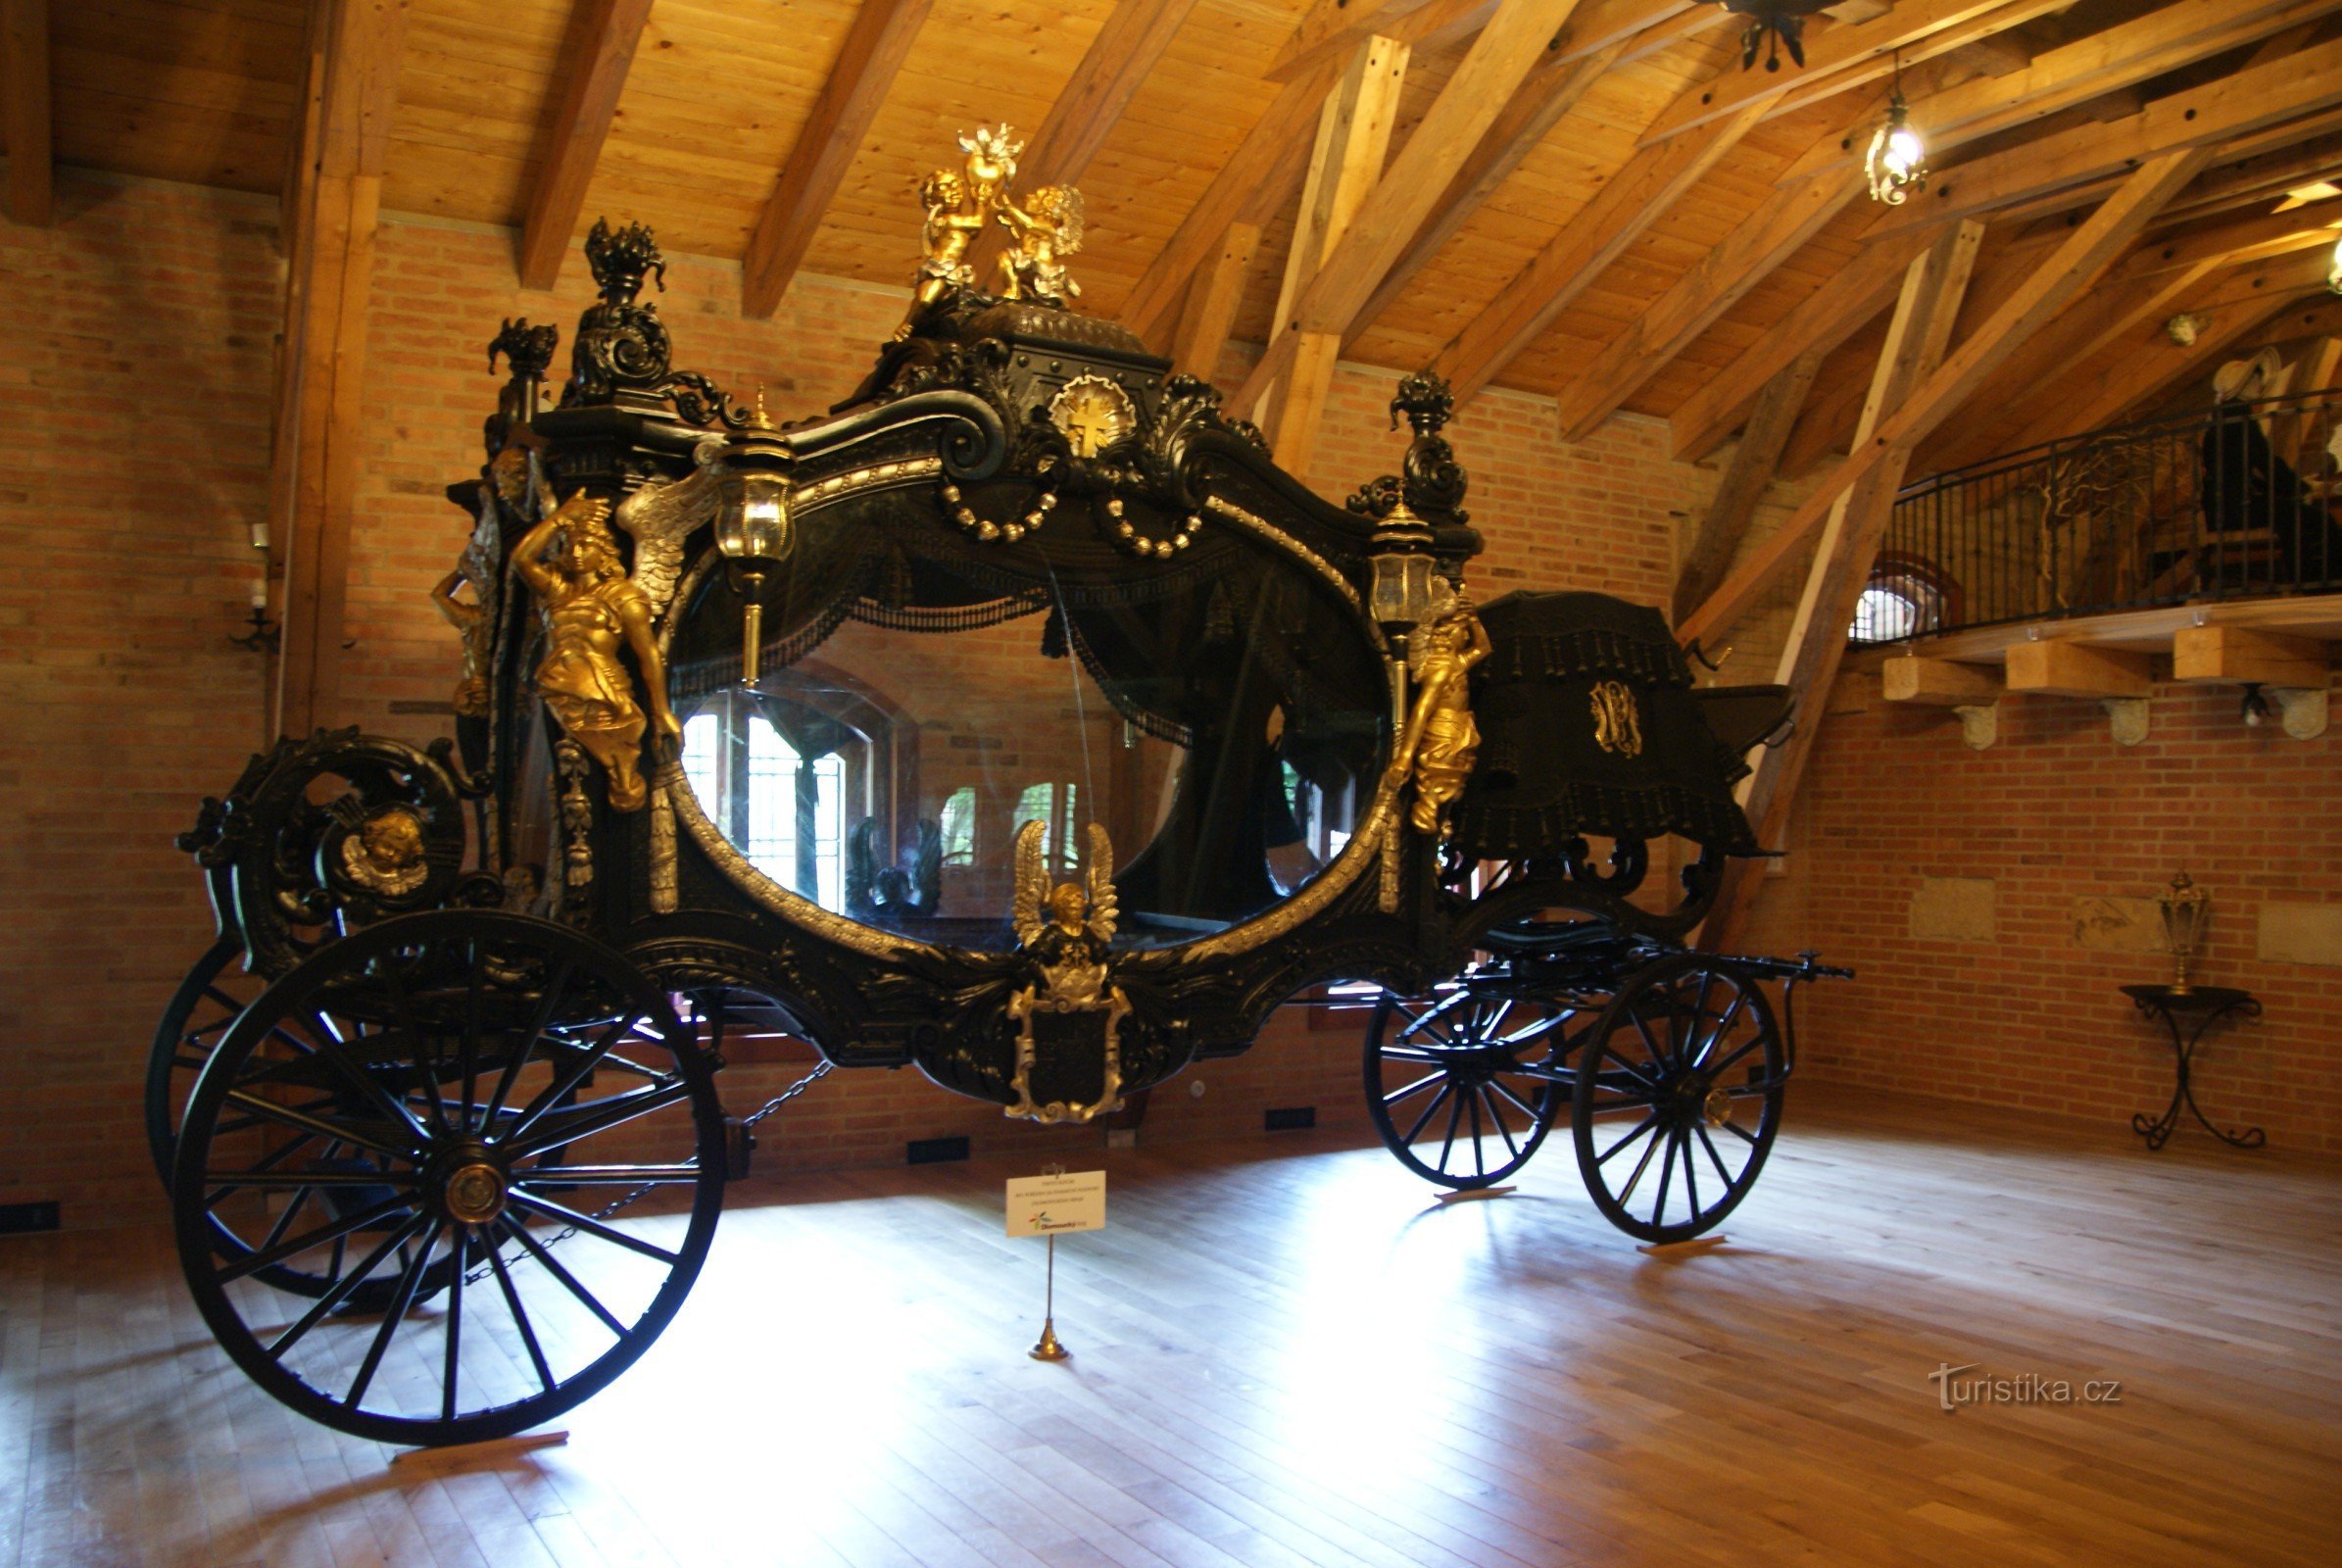 Bohemia Kosířin alla - maailman suurin ruumisauto (vaunumuseo)